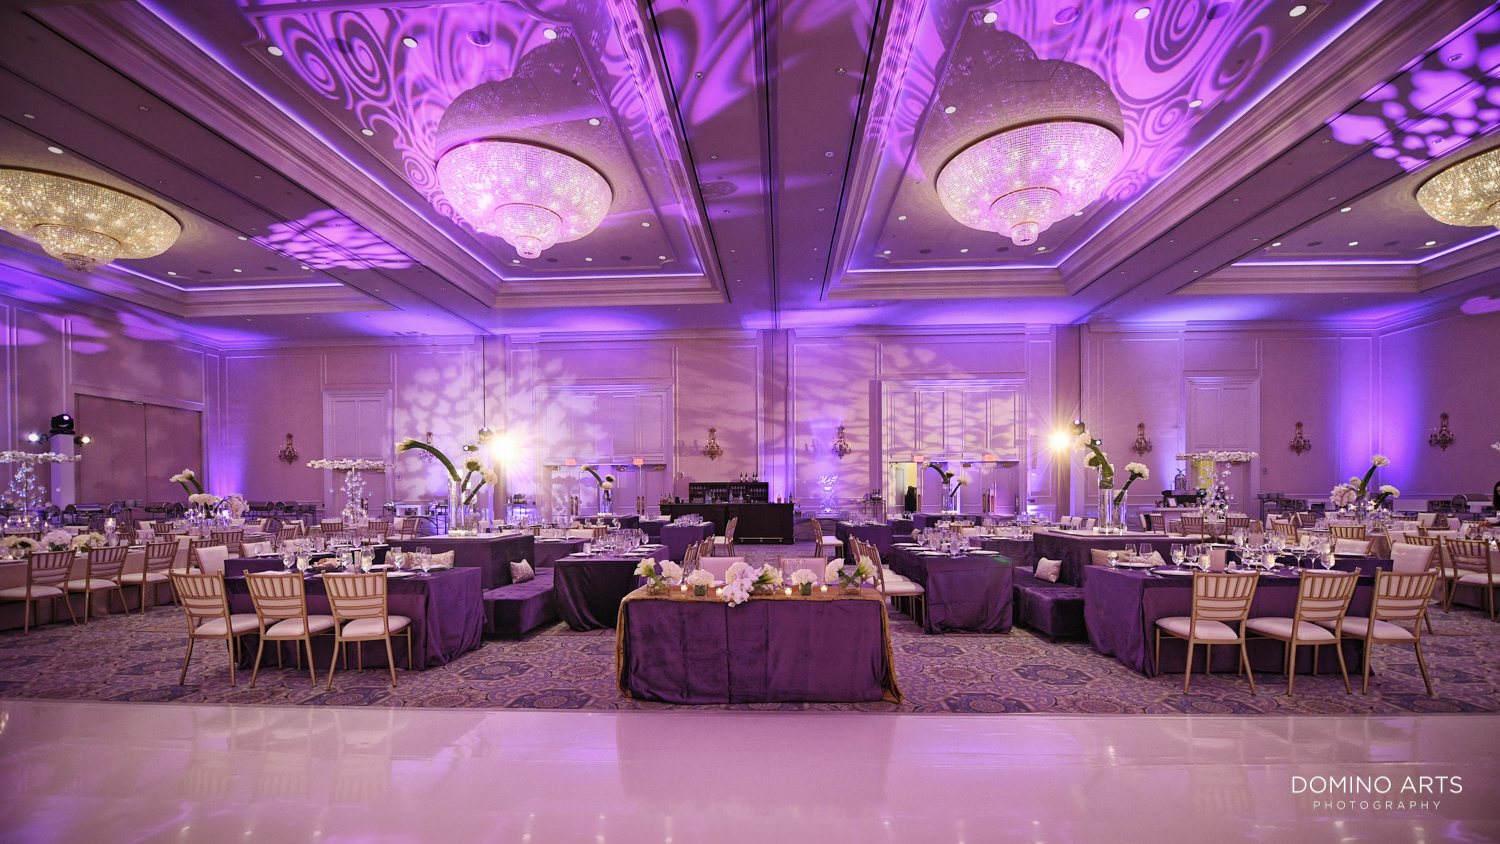 Luxury purple wedding decor at Modern Jewish wedding at Trump national Doral in South Florida 